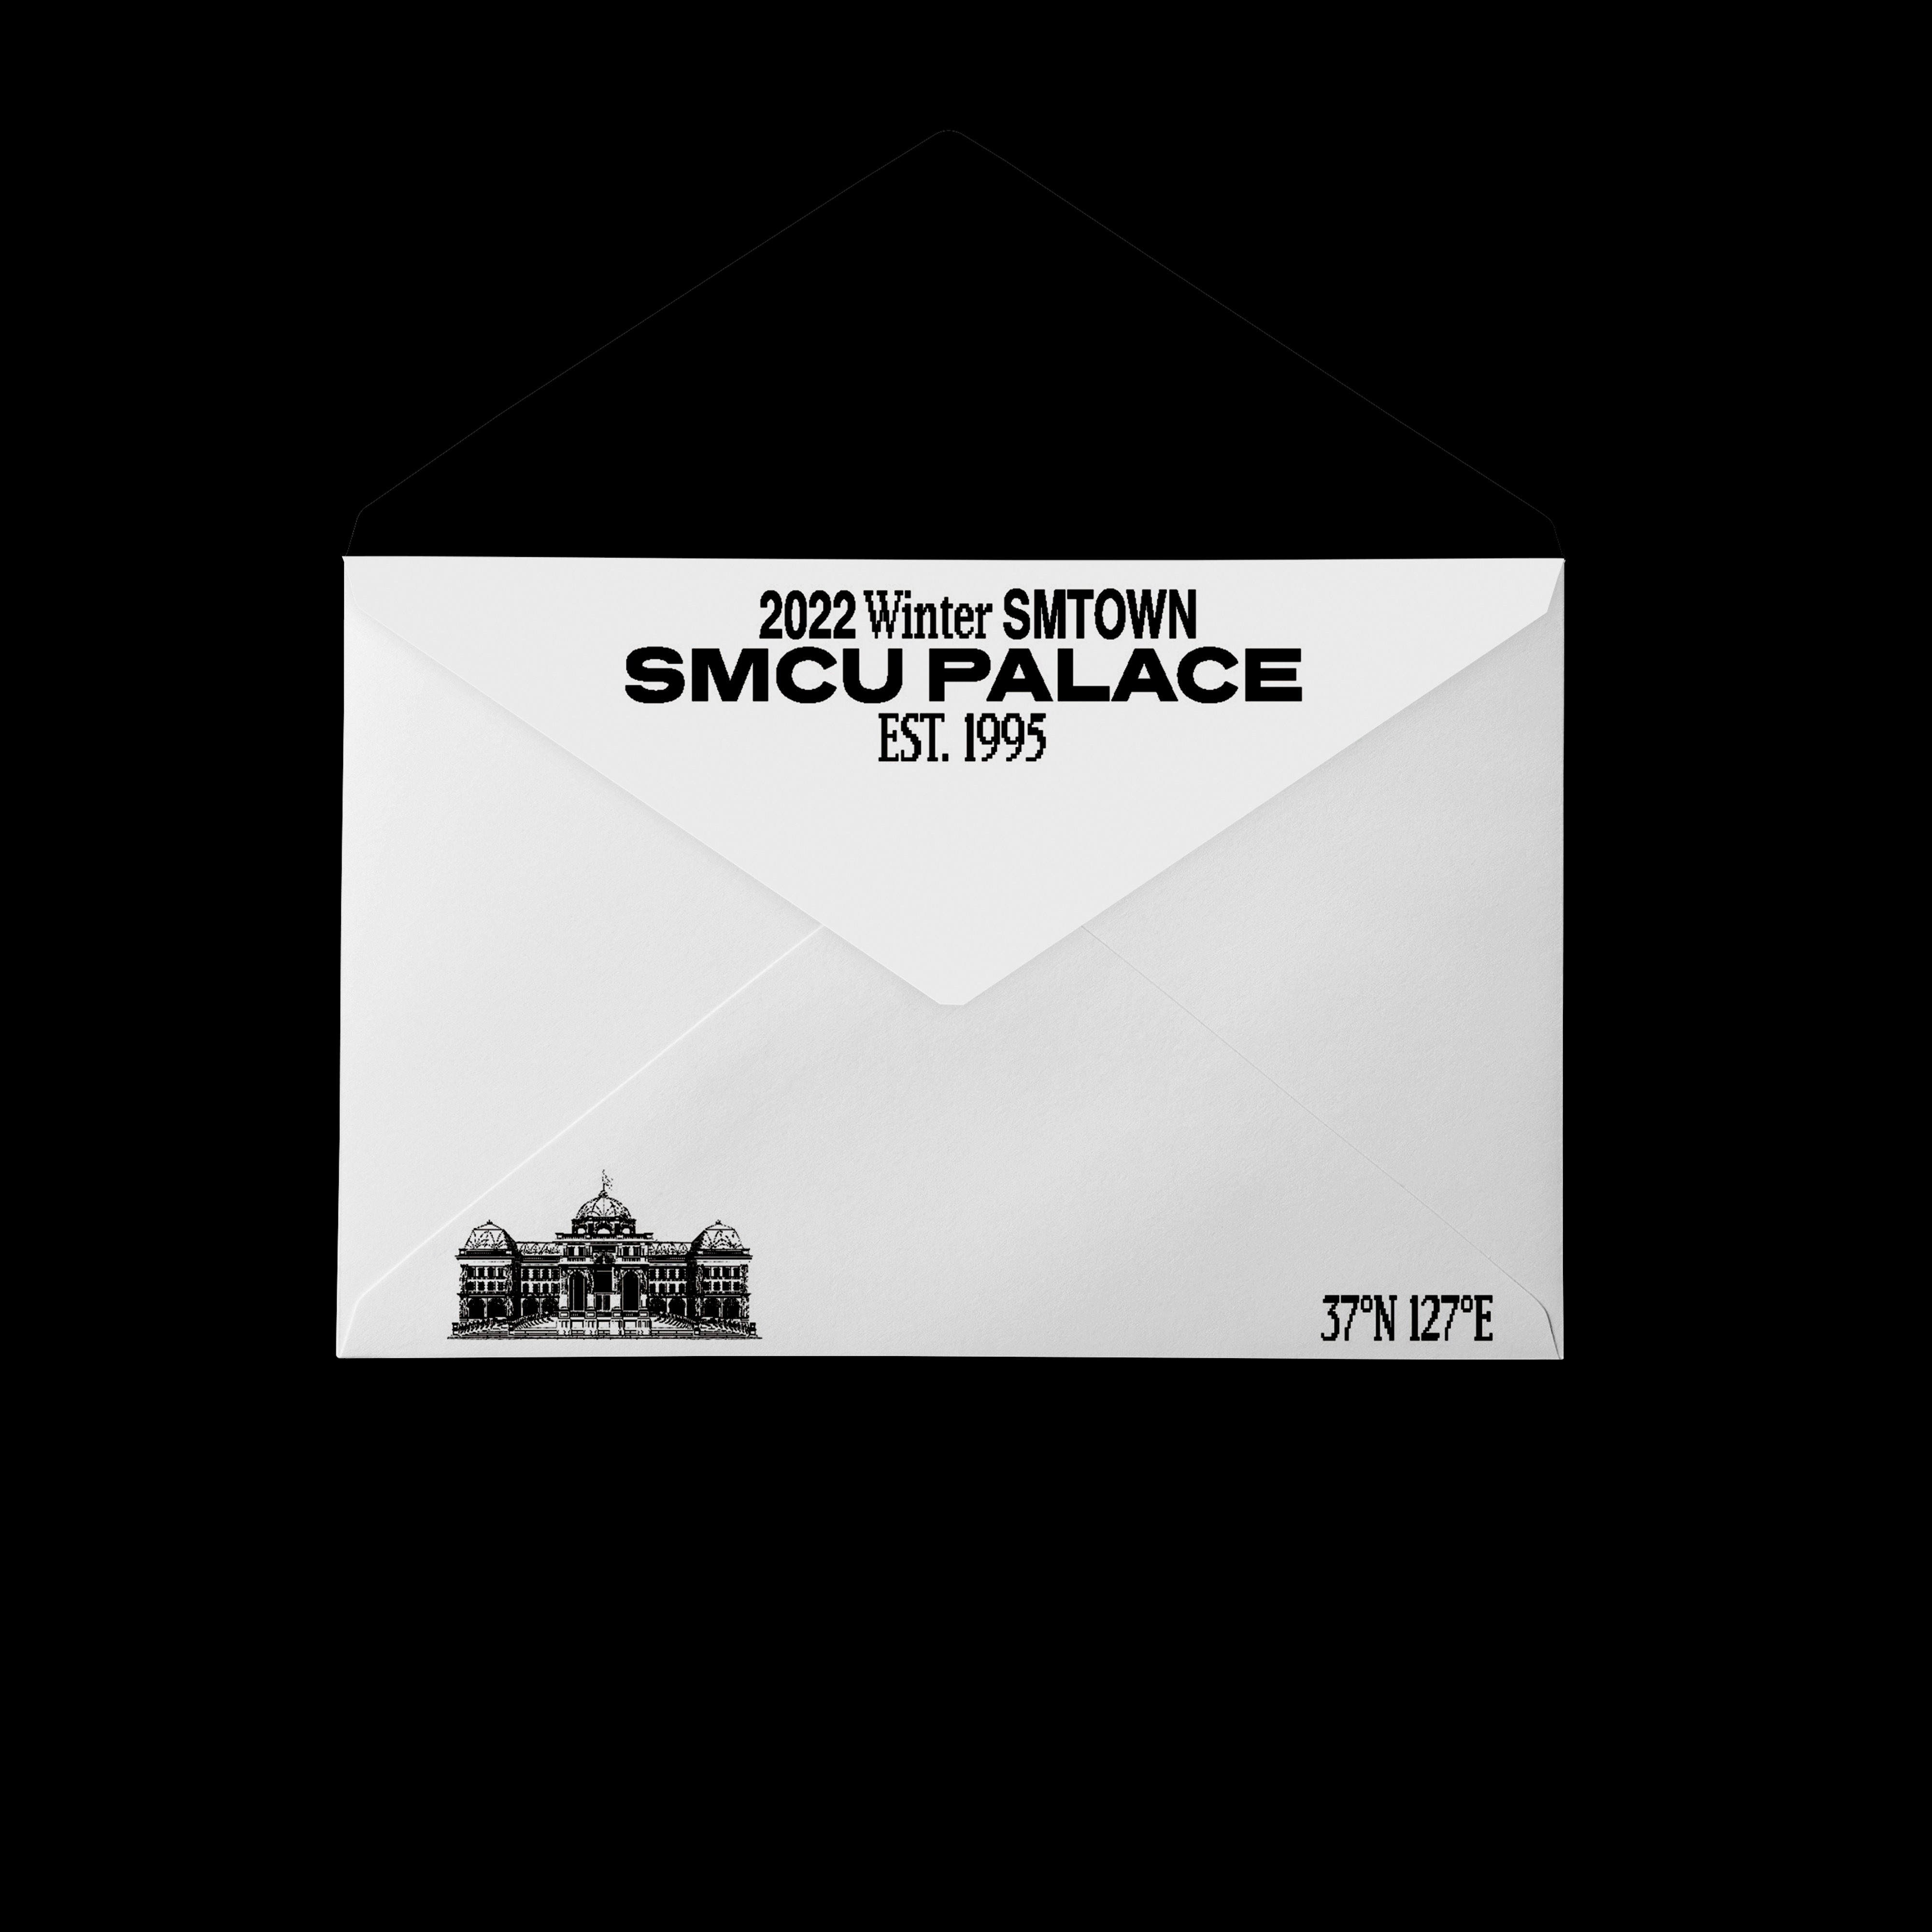 [全款 裸专] NCT DREAM - 2022 Winter SMTOWN : SMCU PALACE (GUEST. NCT DREAM) (Membership Card Ver.) _kpop散粉收容所